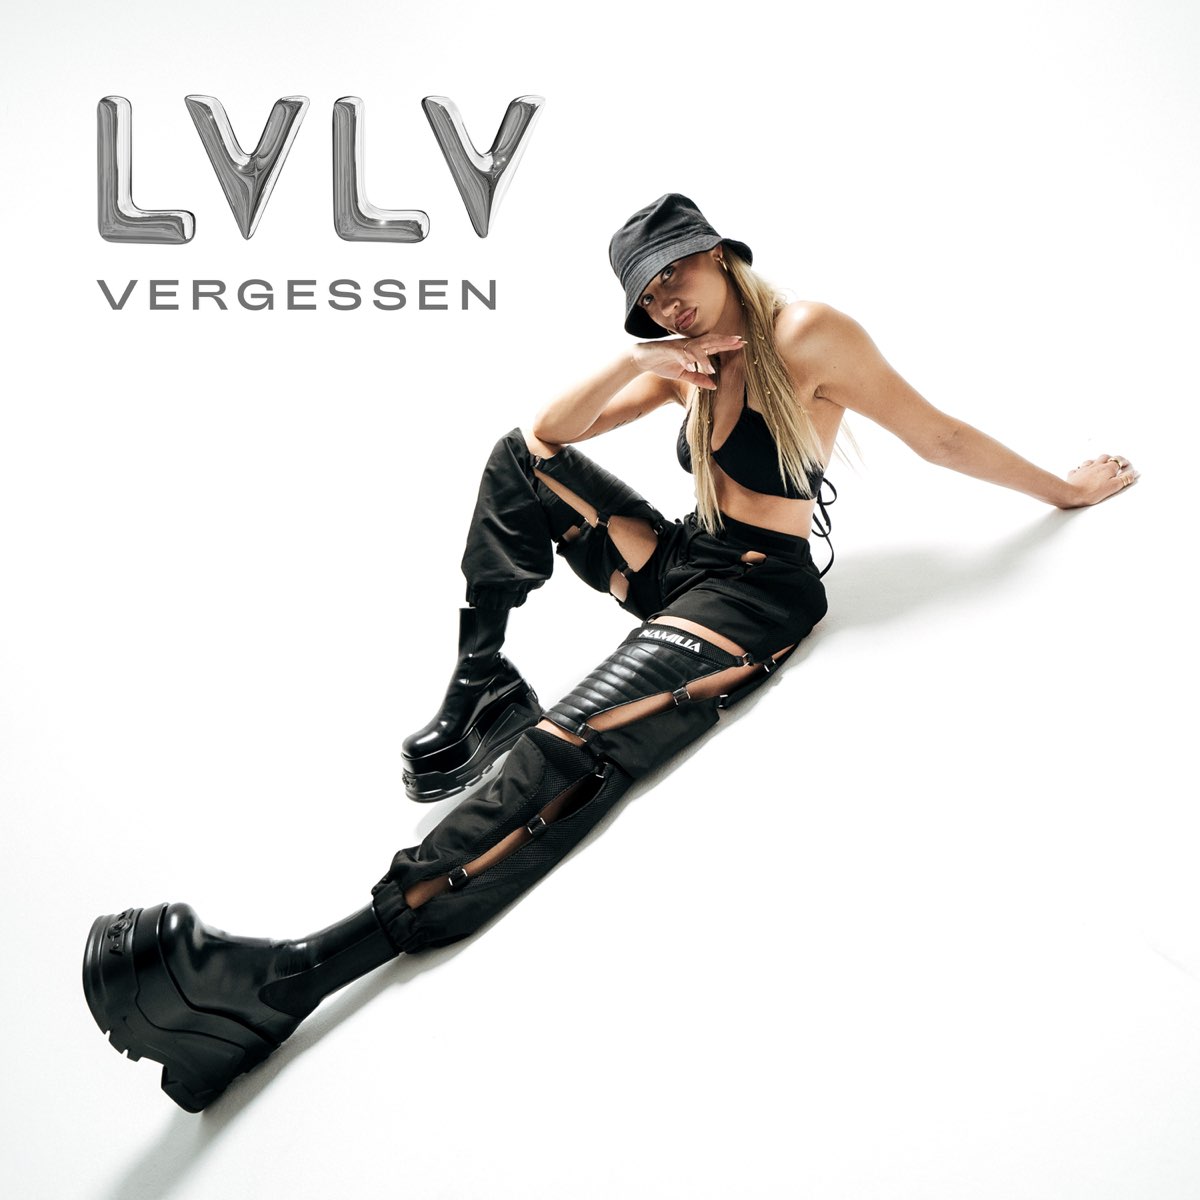 LVLV Vergessen cover artwork